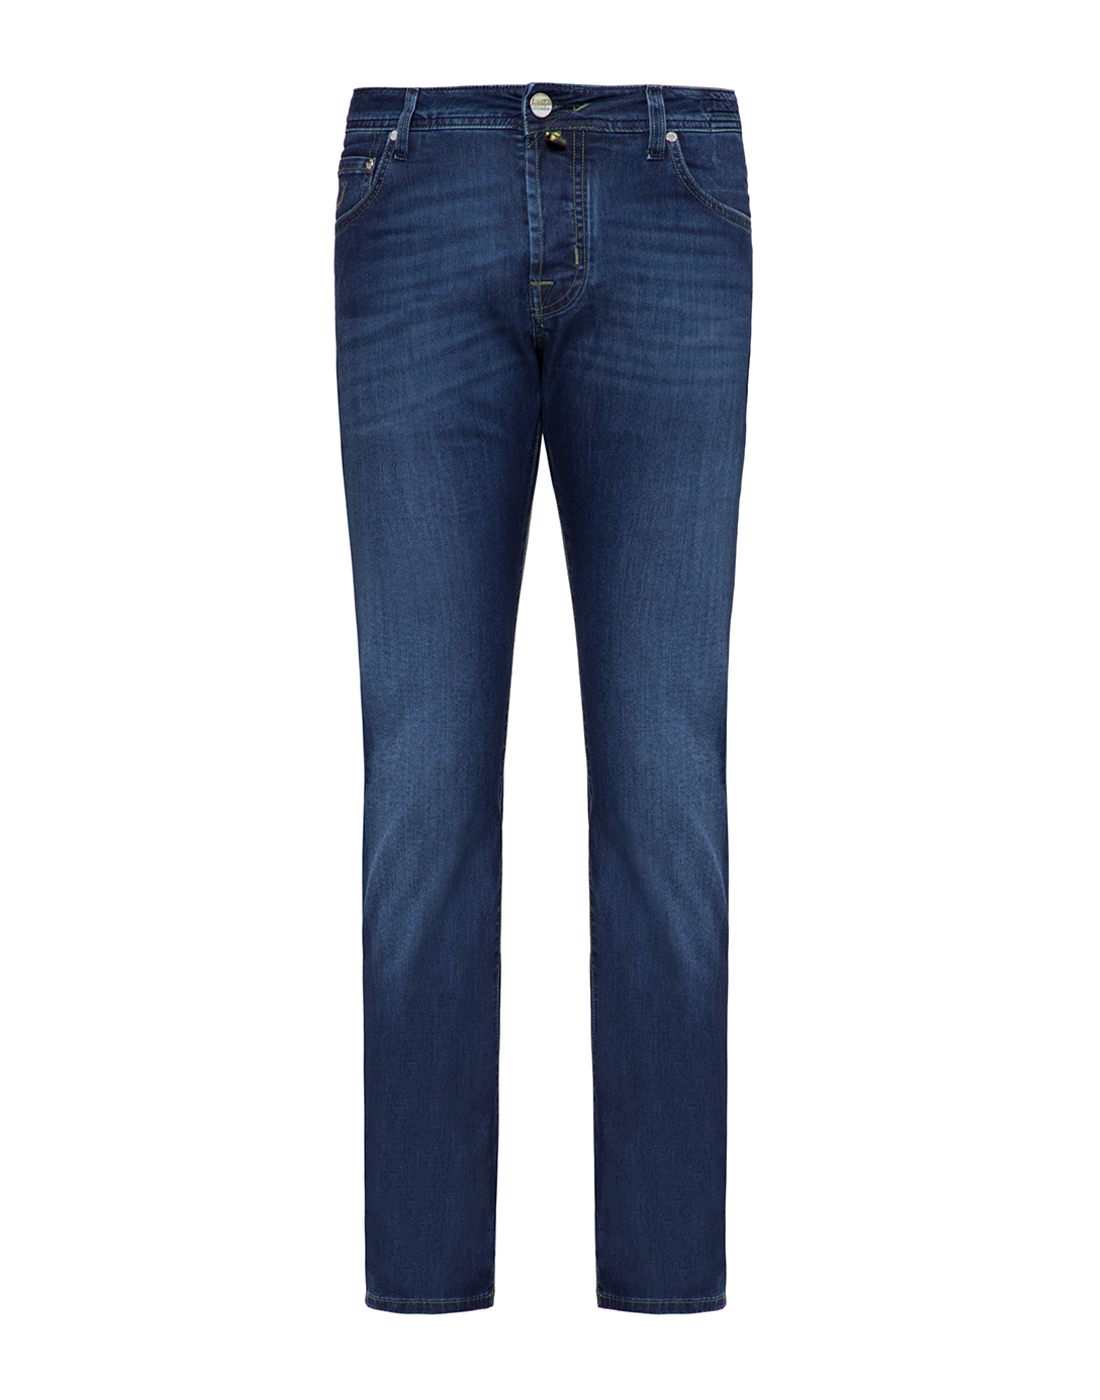 Мужские синие джинсы Jacob Cohen SJ620 COMF-01843-W1-1